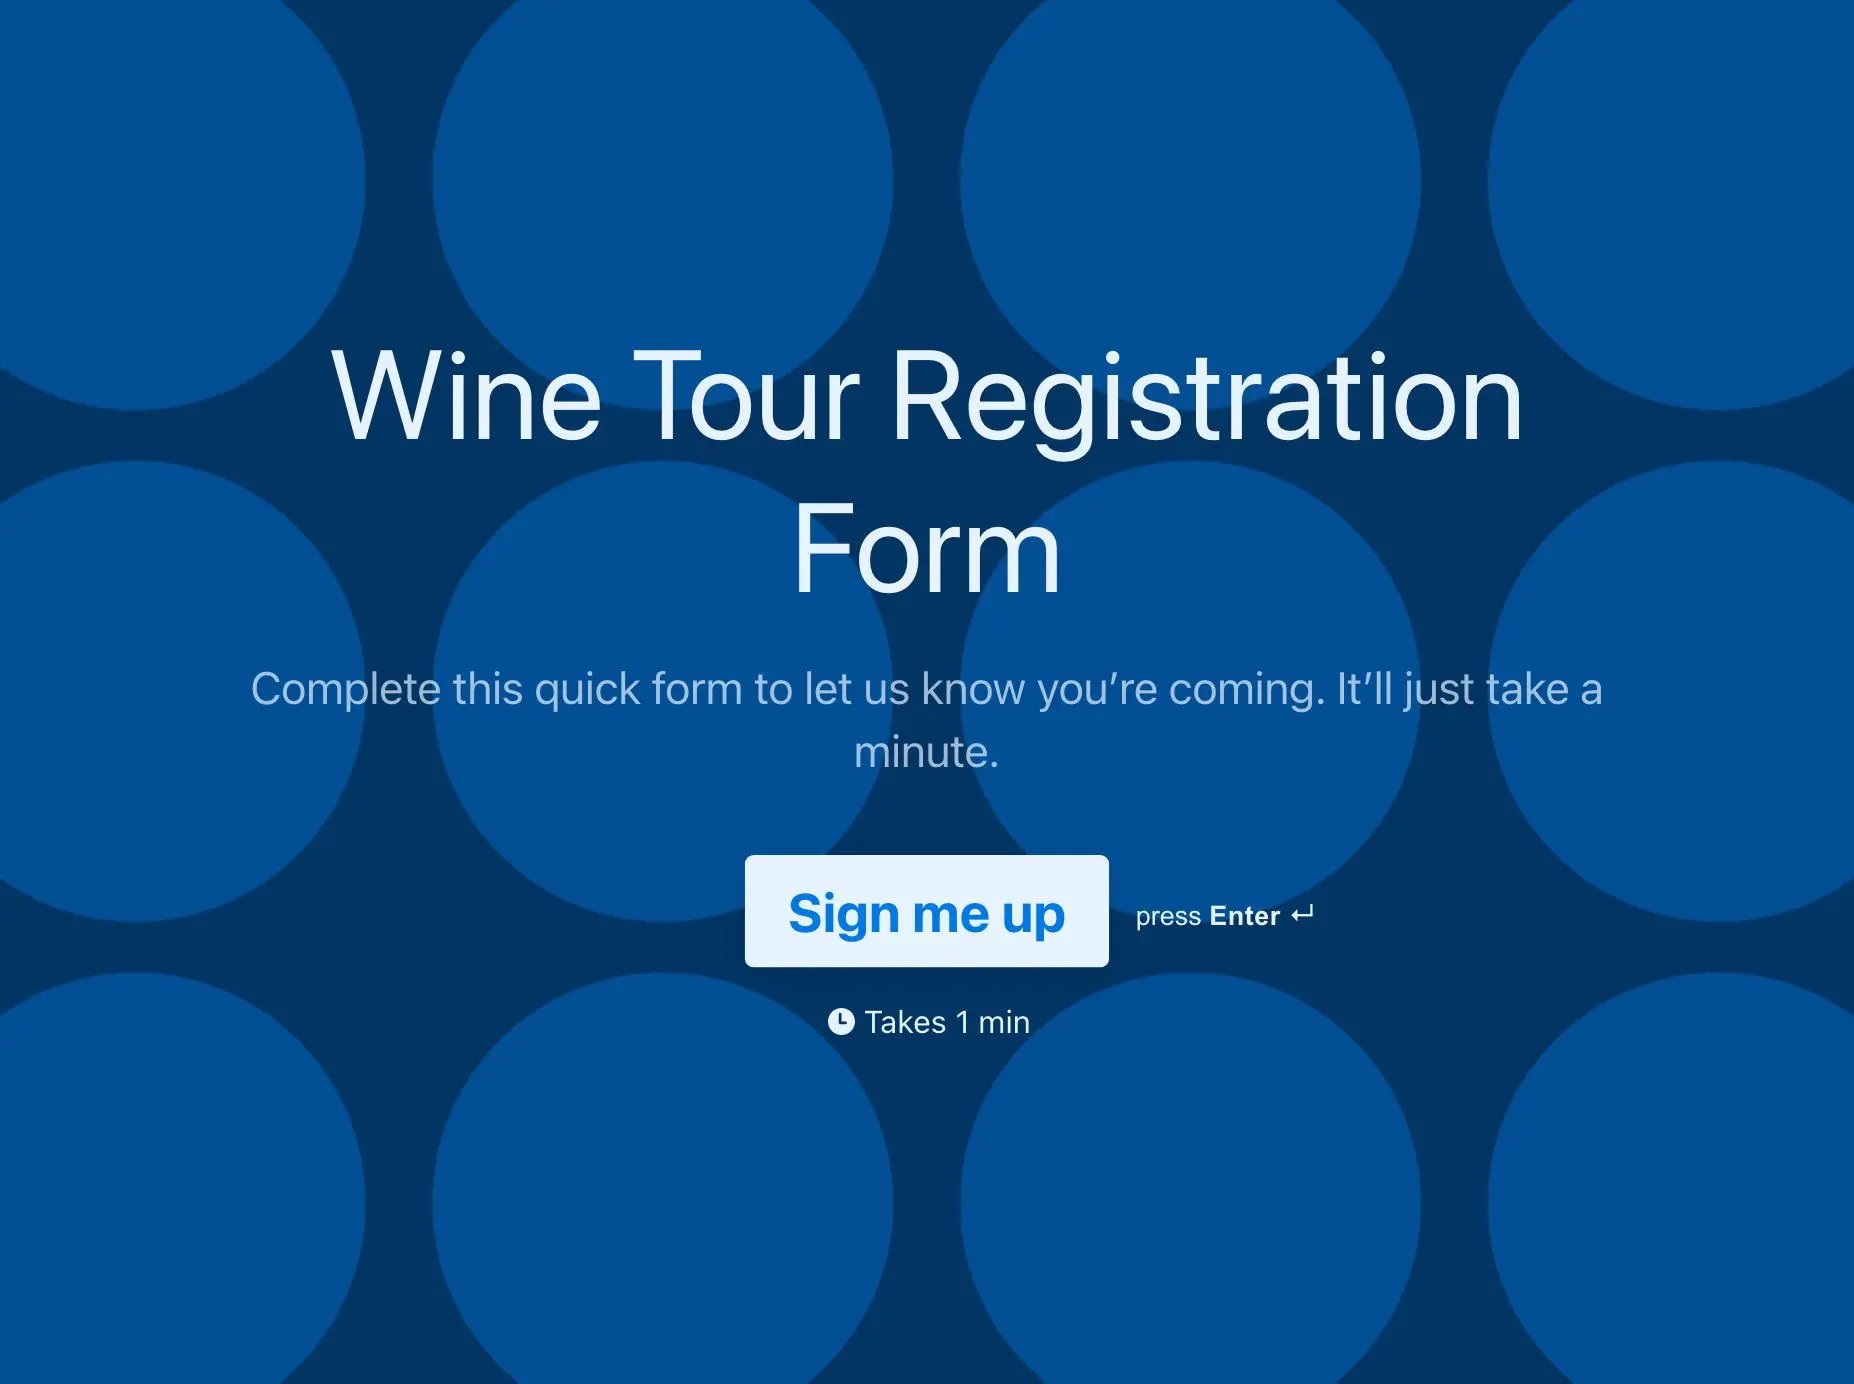 Wine tour registration form template Hero